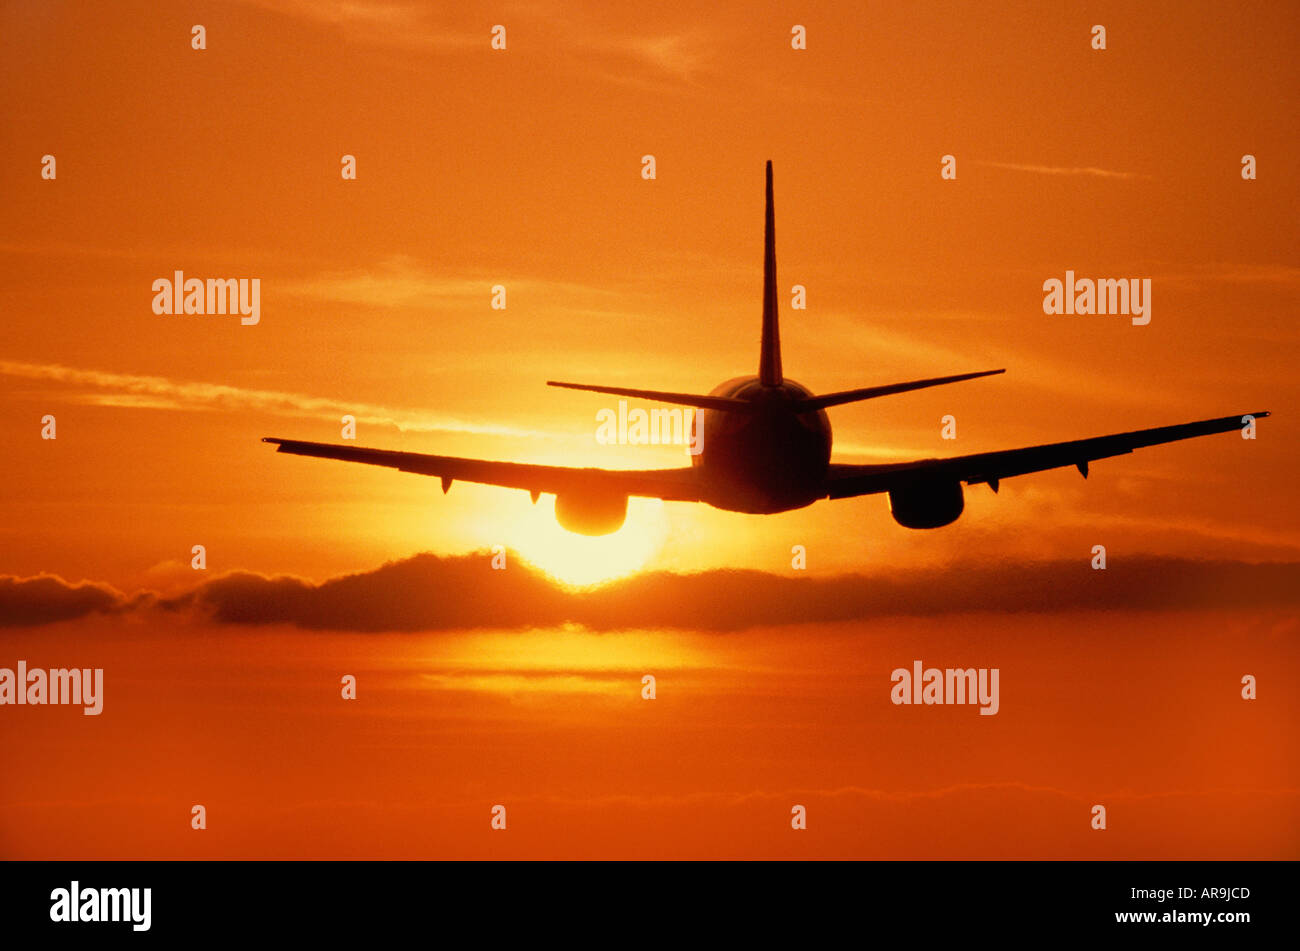 Boeing 737 jet at cruising altitude in the air take off golden orange sky at sunset sunrise dusk Stock Photo